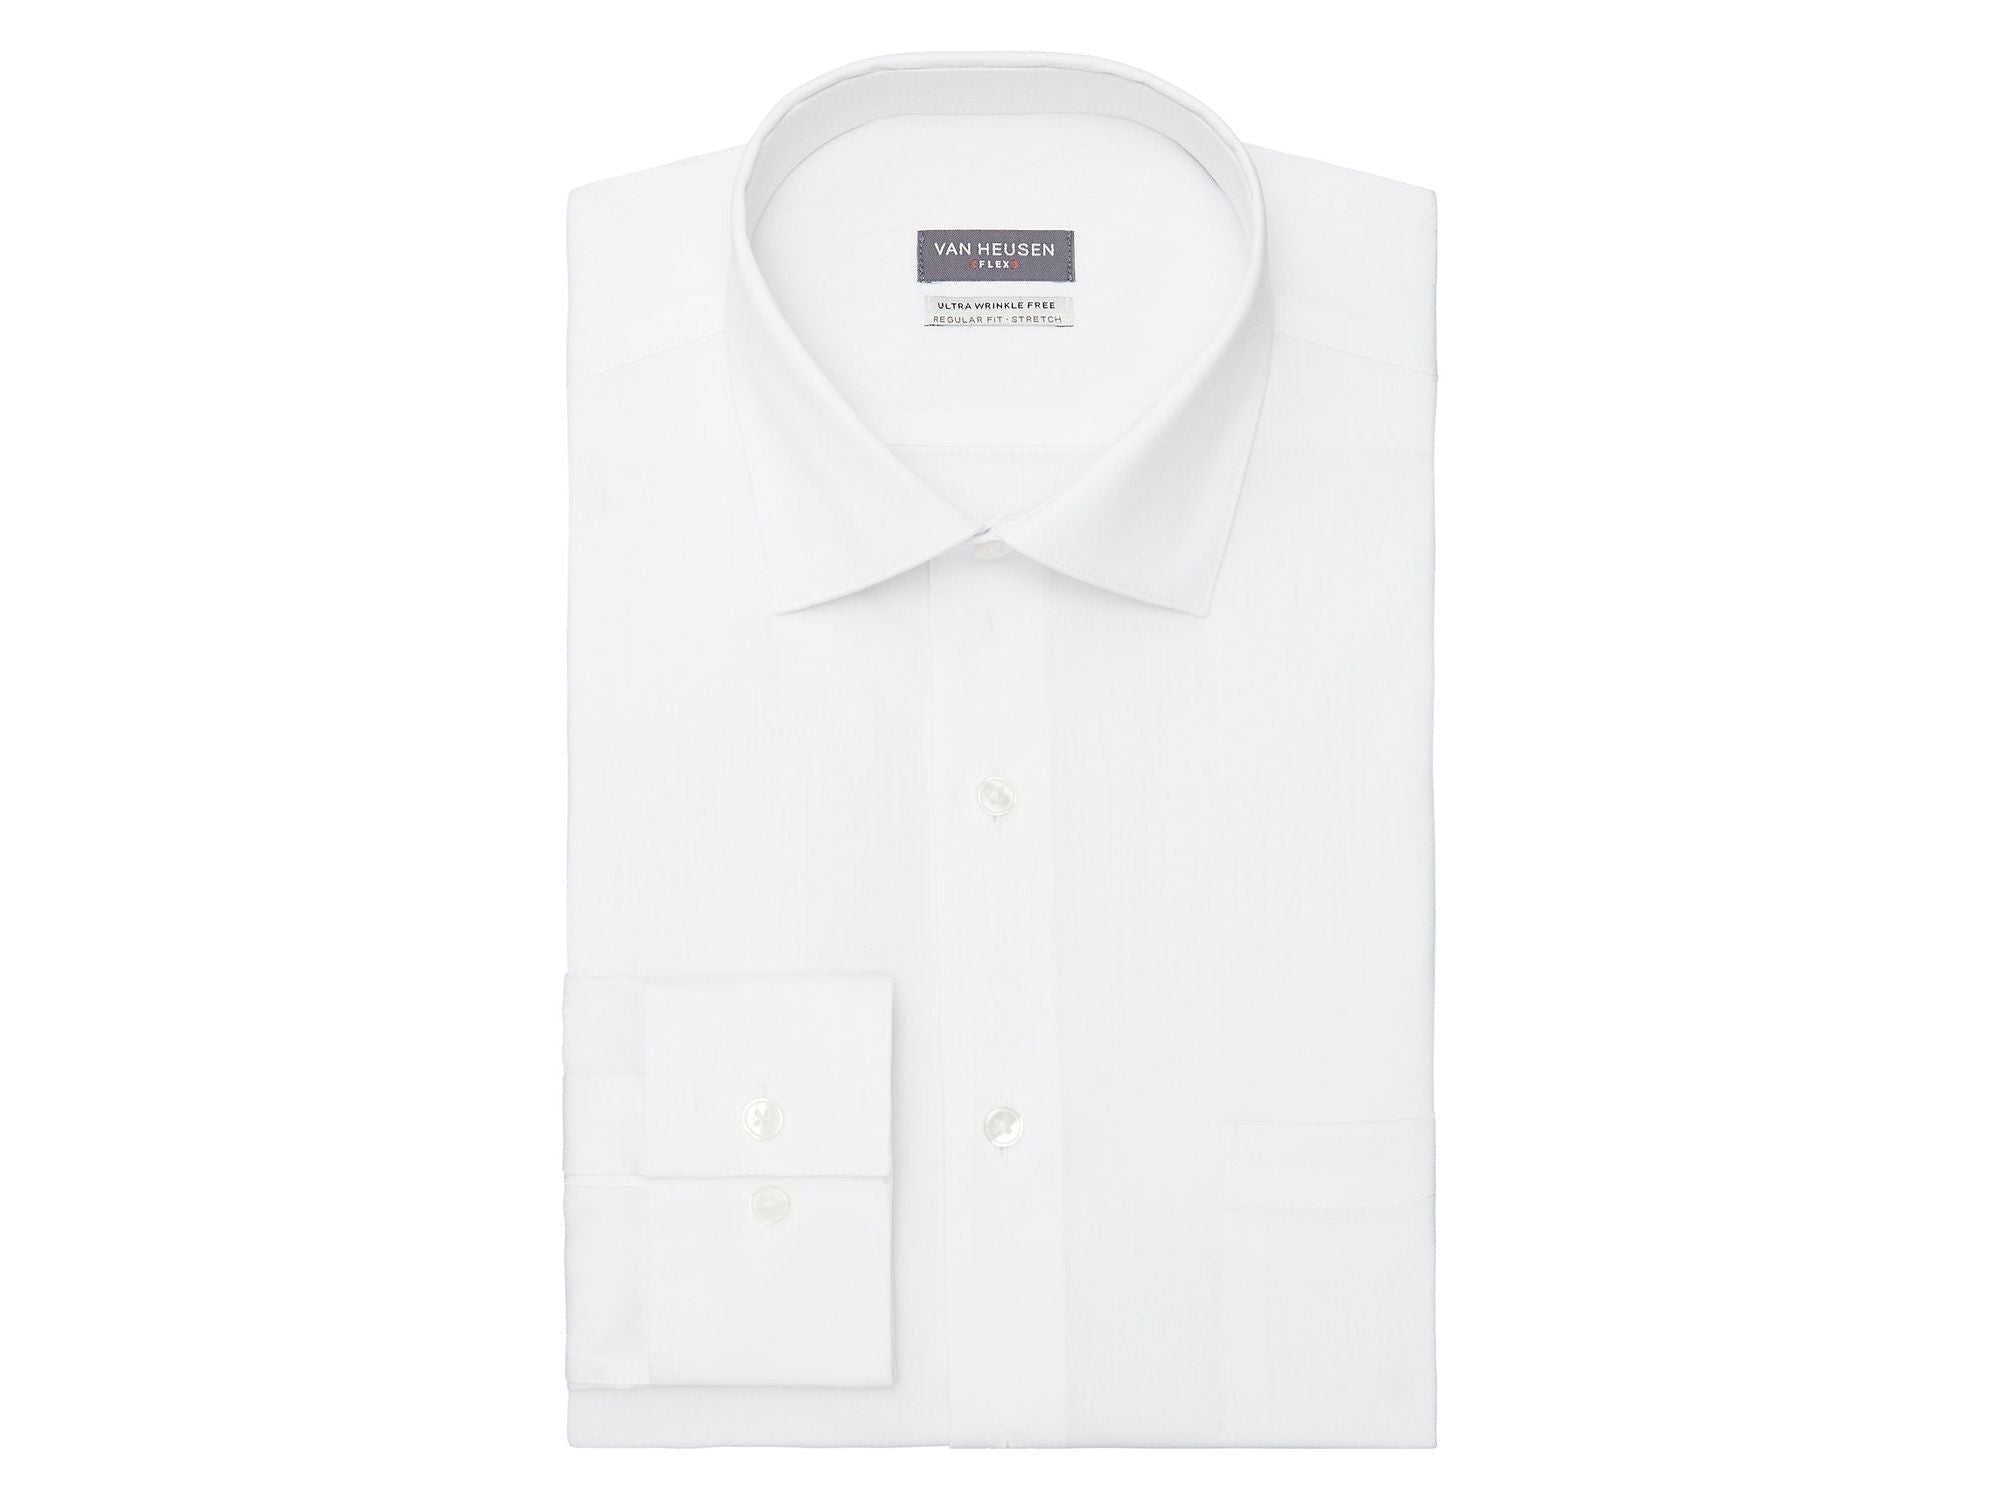 -Rainwater's -Rainwater's - Dress Shirt - Van Heusen Regular Fit Ultra Wrinkle Free Stretch FLEX Solid Dress Shirt in White -